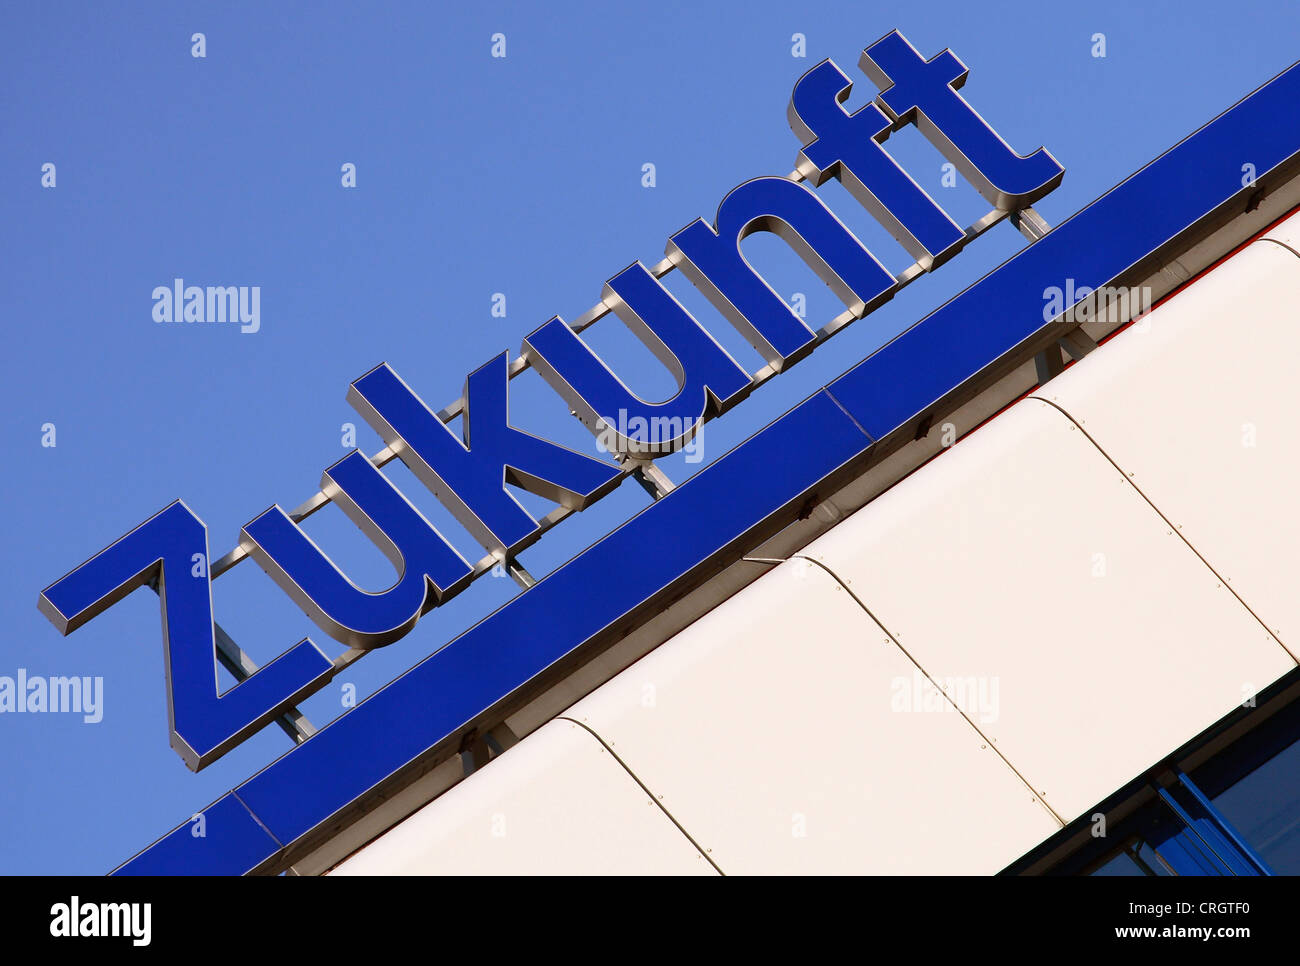 advertising writing on rooftop saying 'Zukunft' Stock Photo